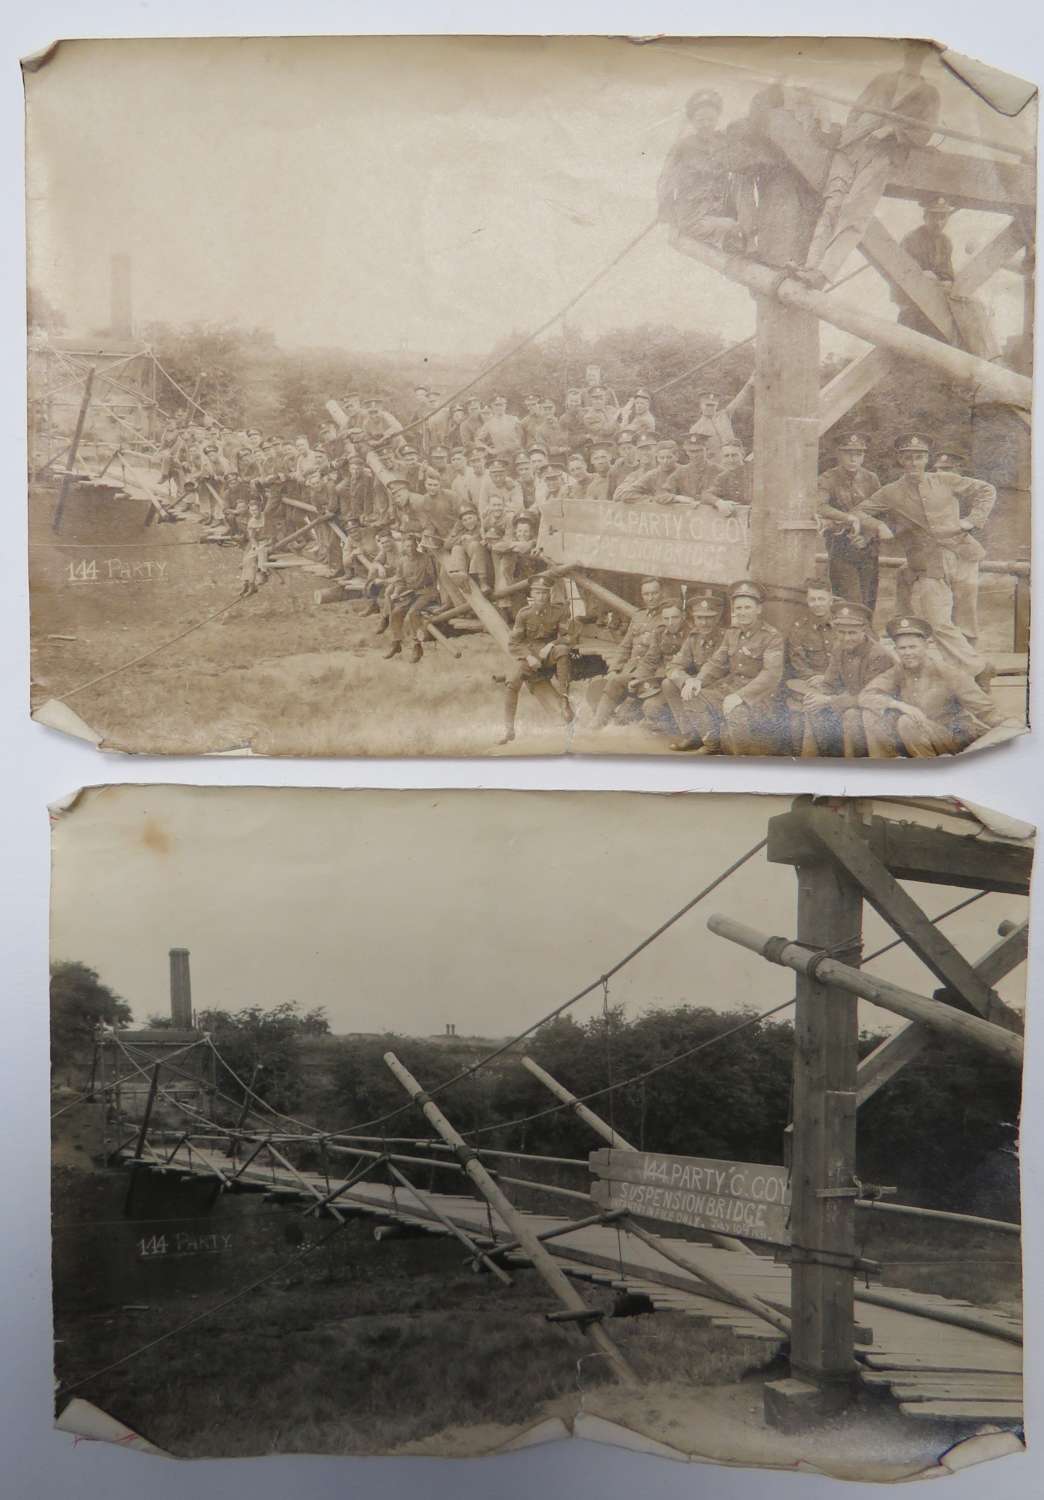 1931 Royal Engineer Bridging Photographs